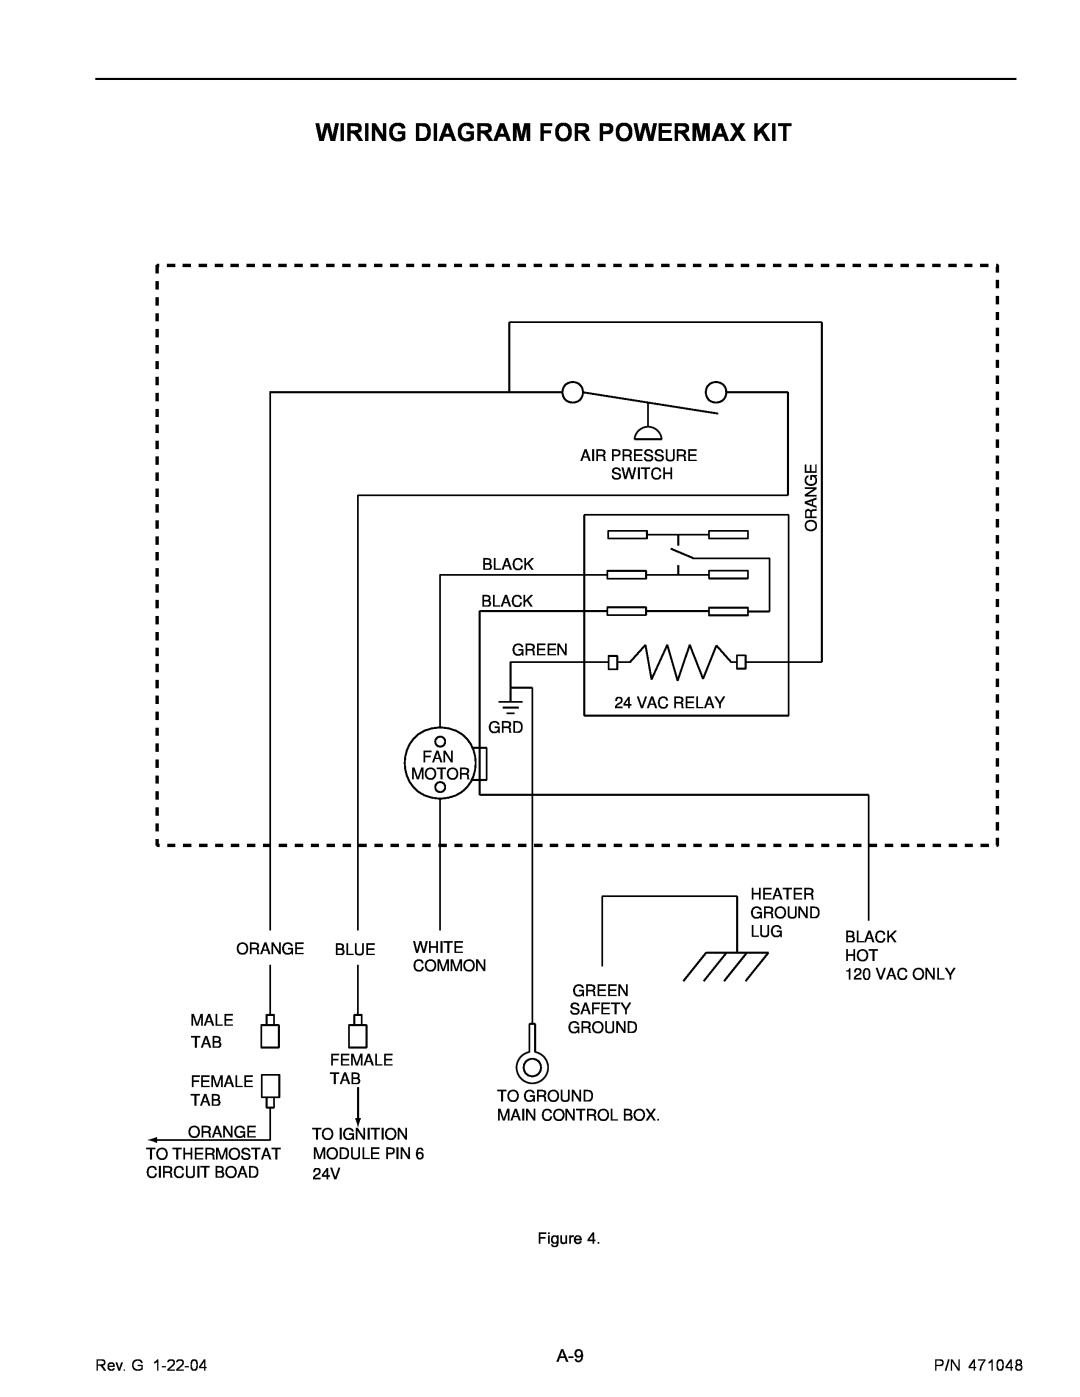 Pentair 100 installation manual Wiring Diagram For Powermax Kit 